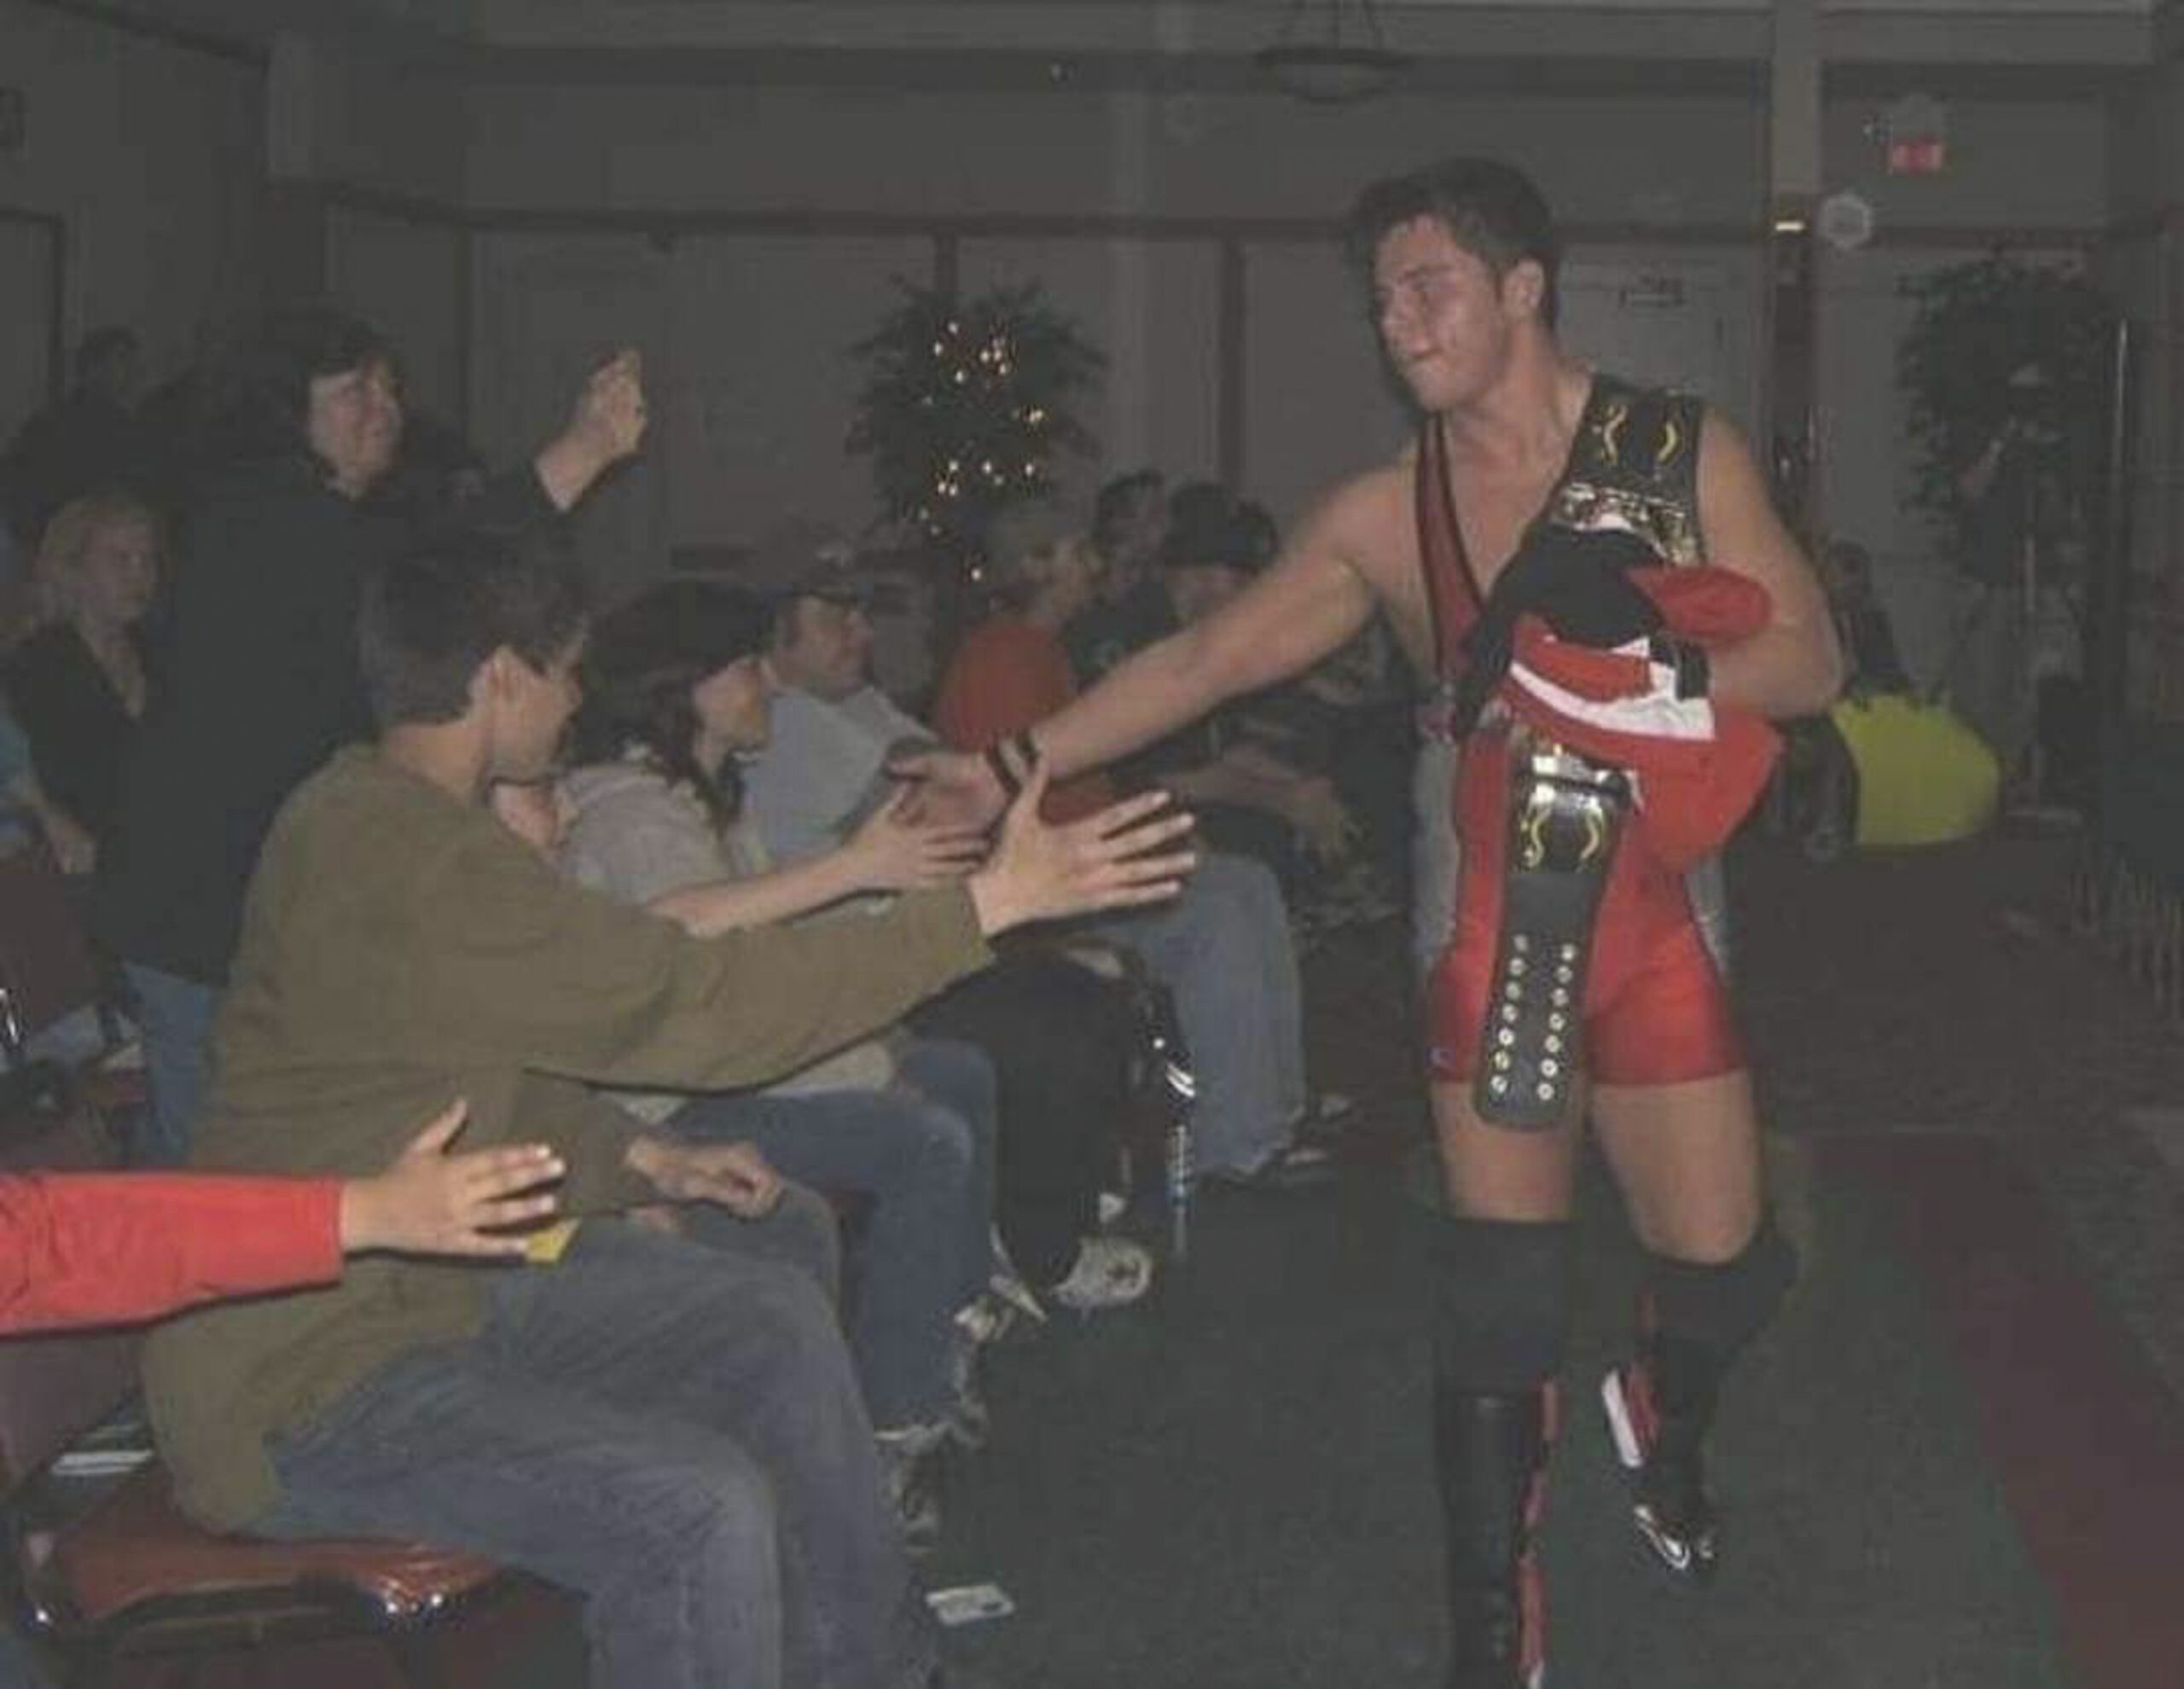 Stefan Richard, professional wrestler, walks past a group of fans with a championship belt.